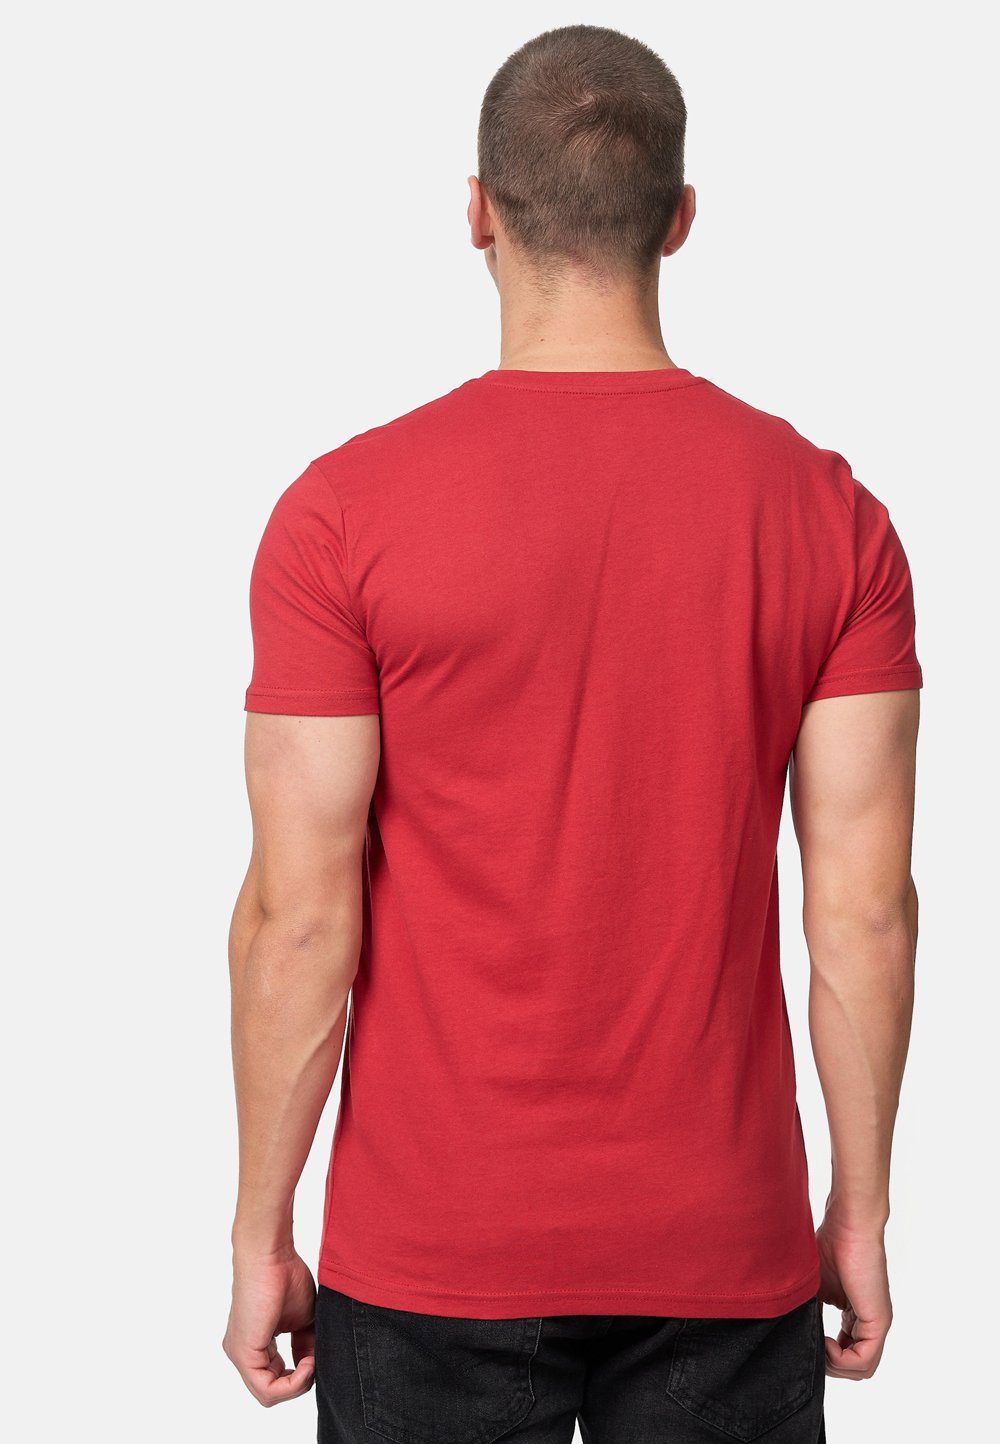 SILVERHILL Lonsdale Red/Navy Dark T-Shirt